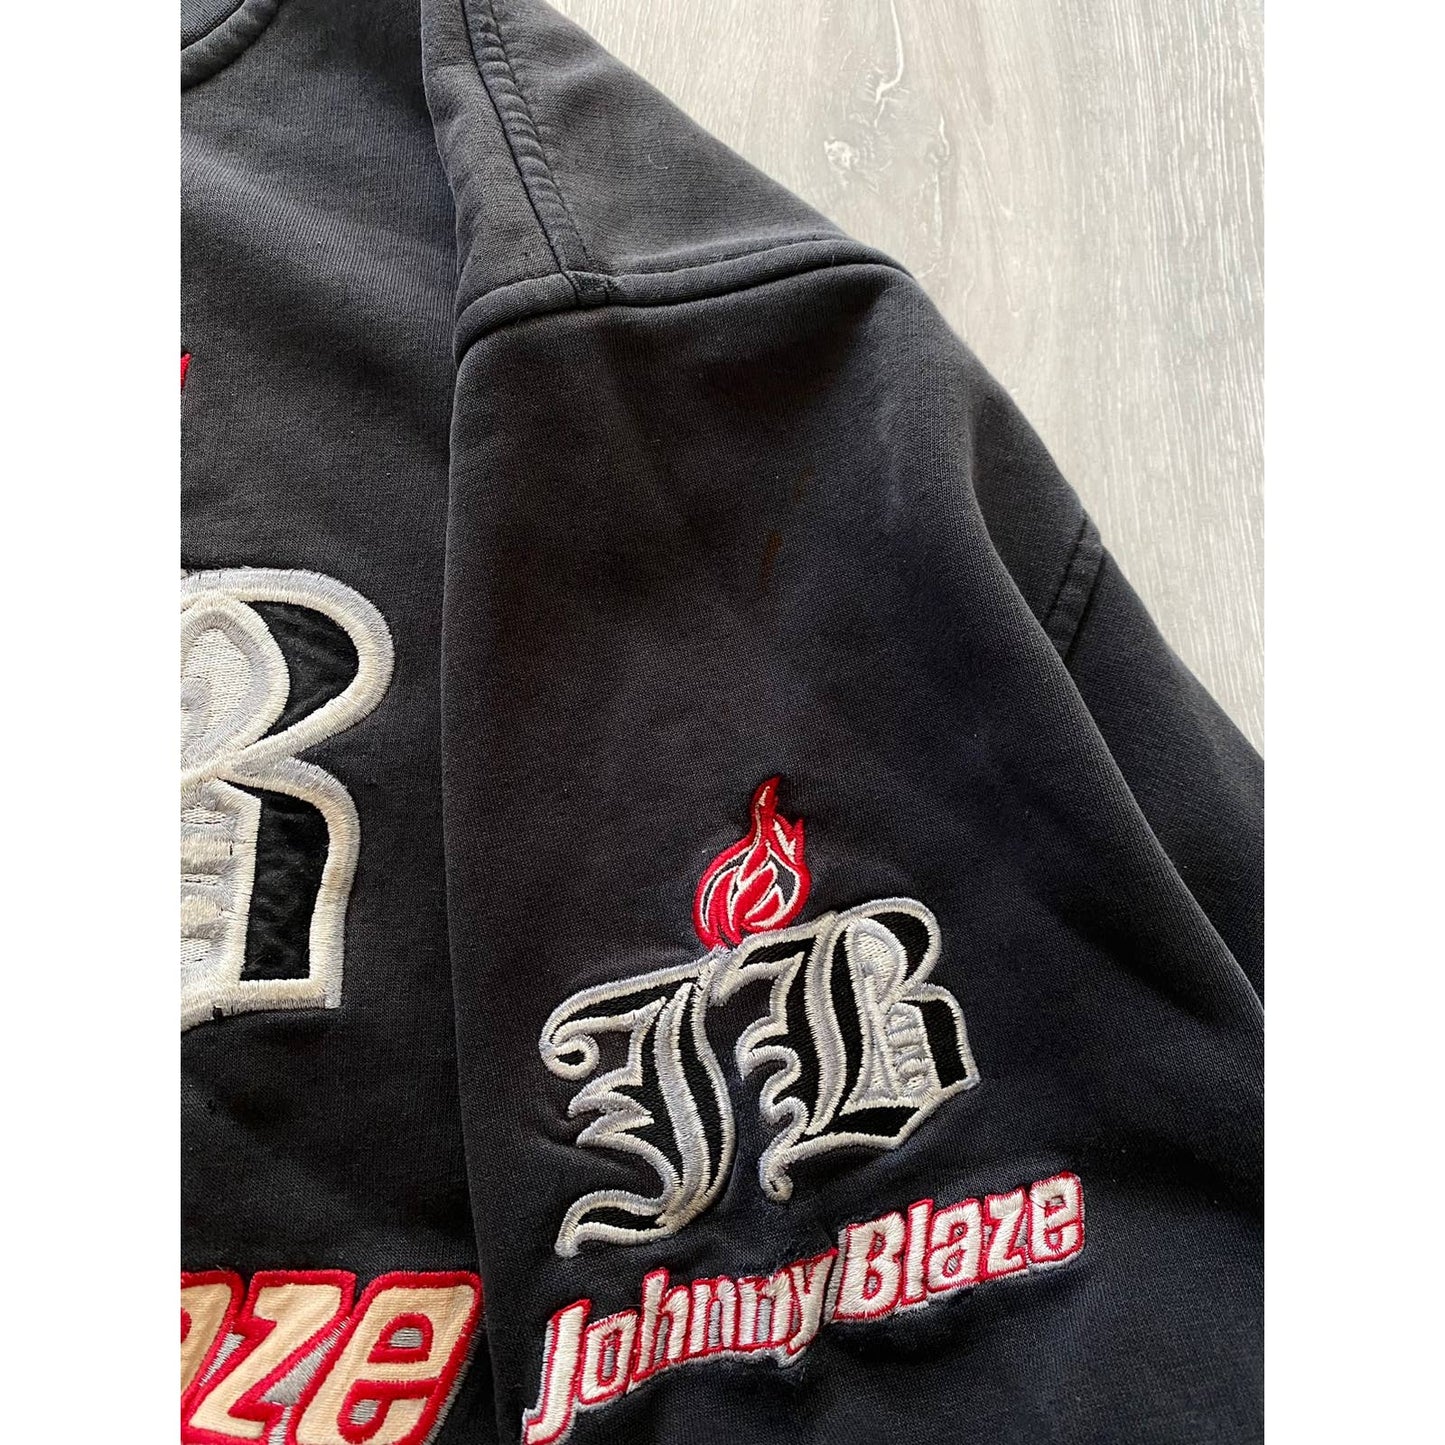 Johnny Blaze vintage black sweatshirt big logo Wu Tang